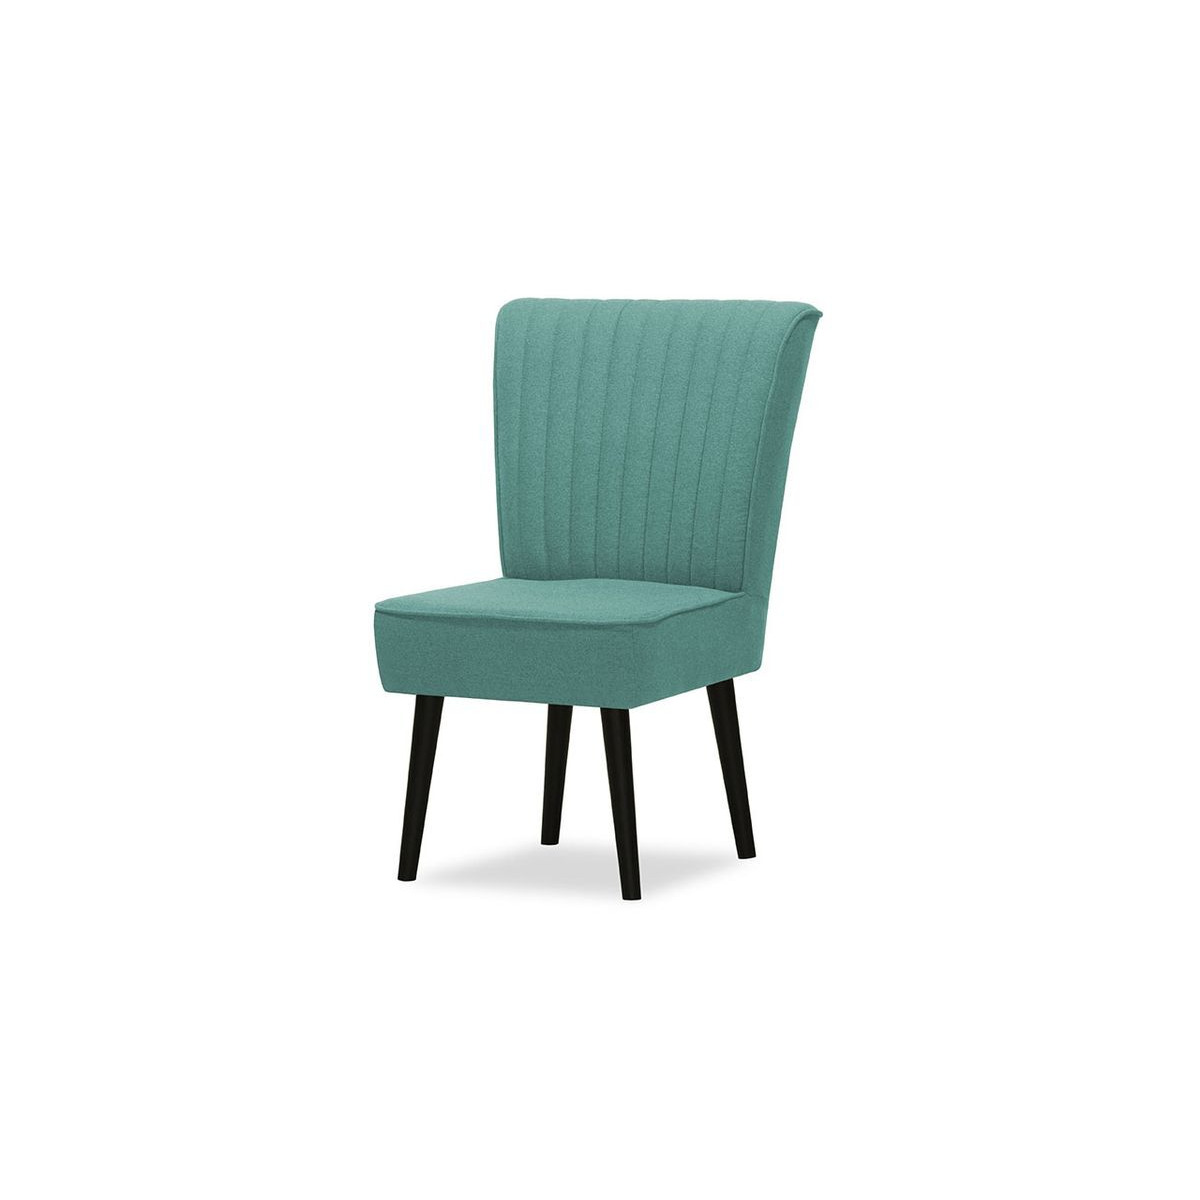 Tagen Dining Chair, light blue, Leg colour: white - image 1